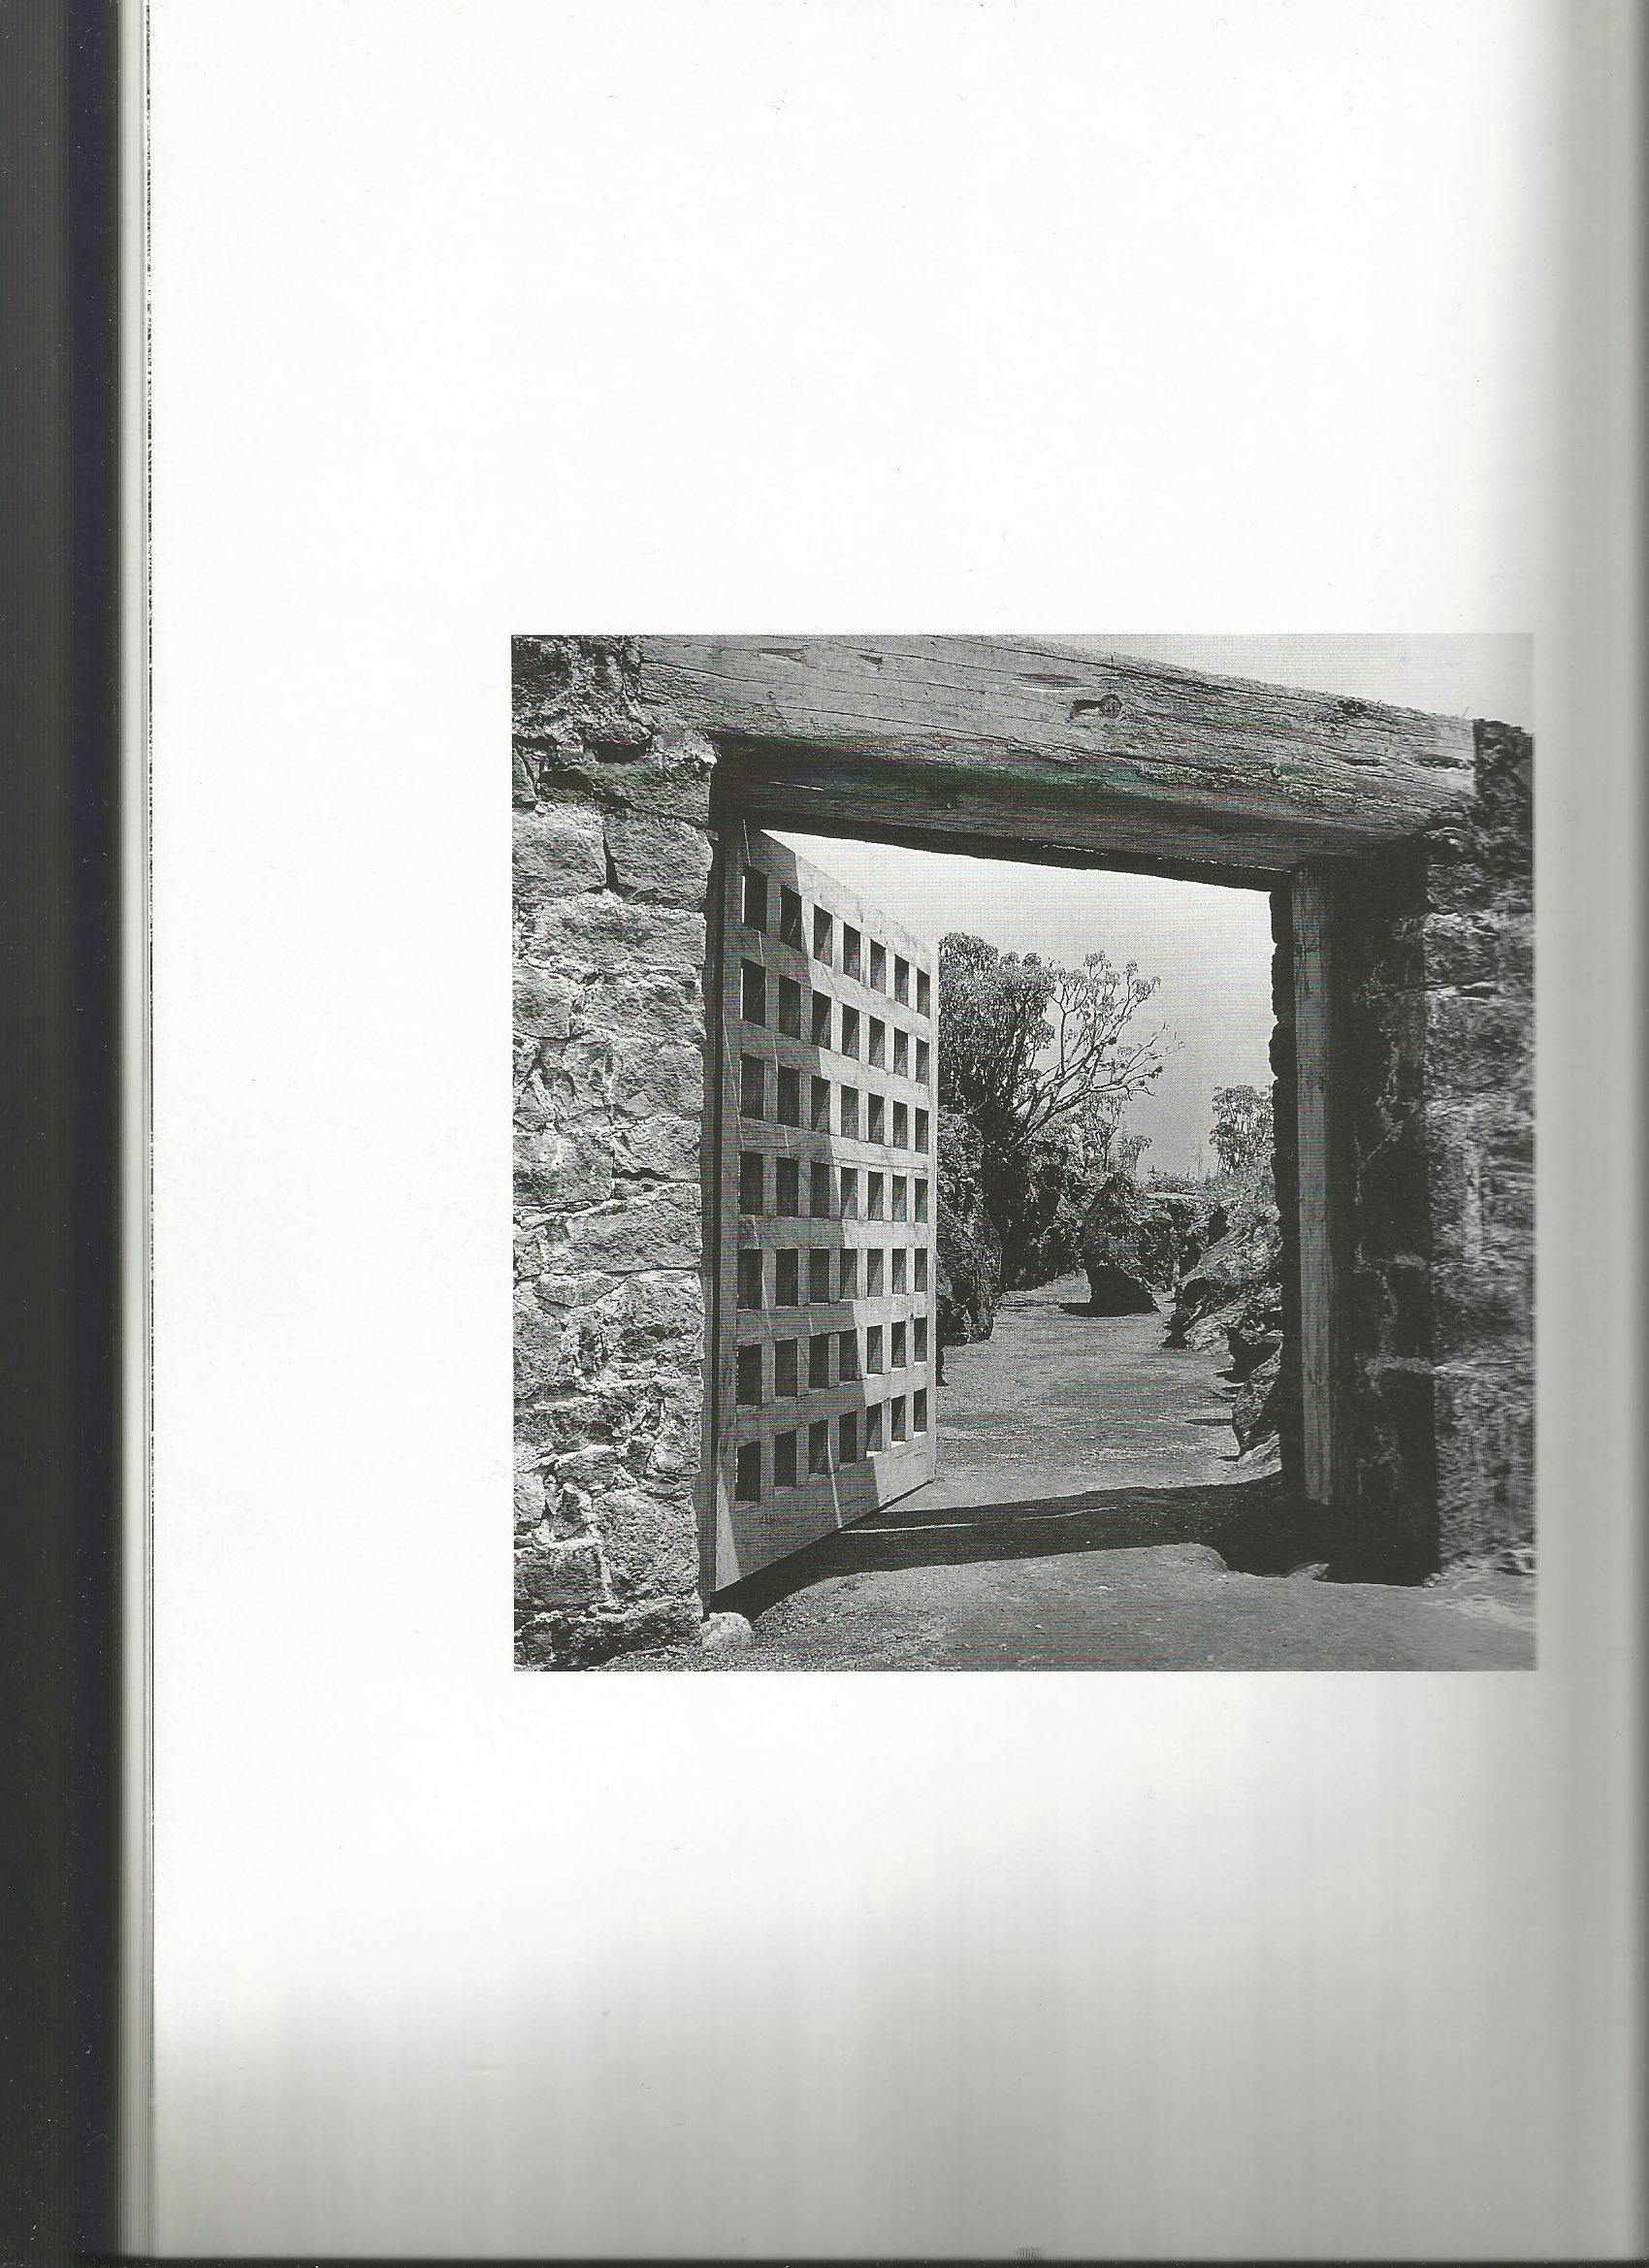 Armando Salas Portugal Photographs Moder Architecture of Mexico Vol. 1 - Luis Barragan El Pedregal Gate Cropped